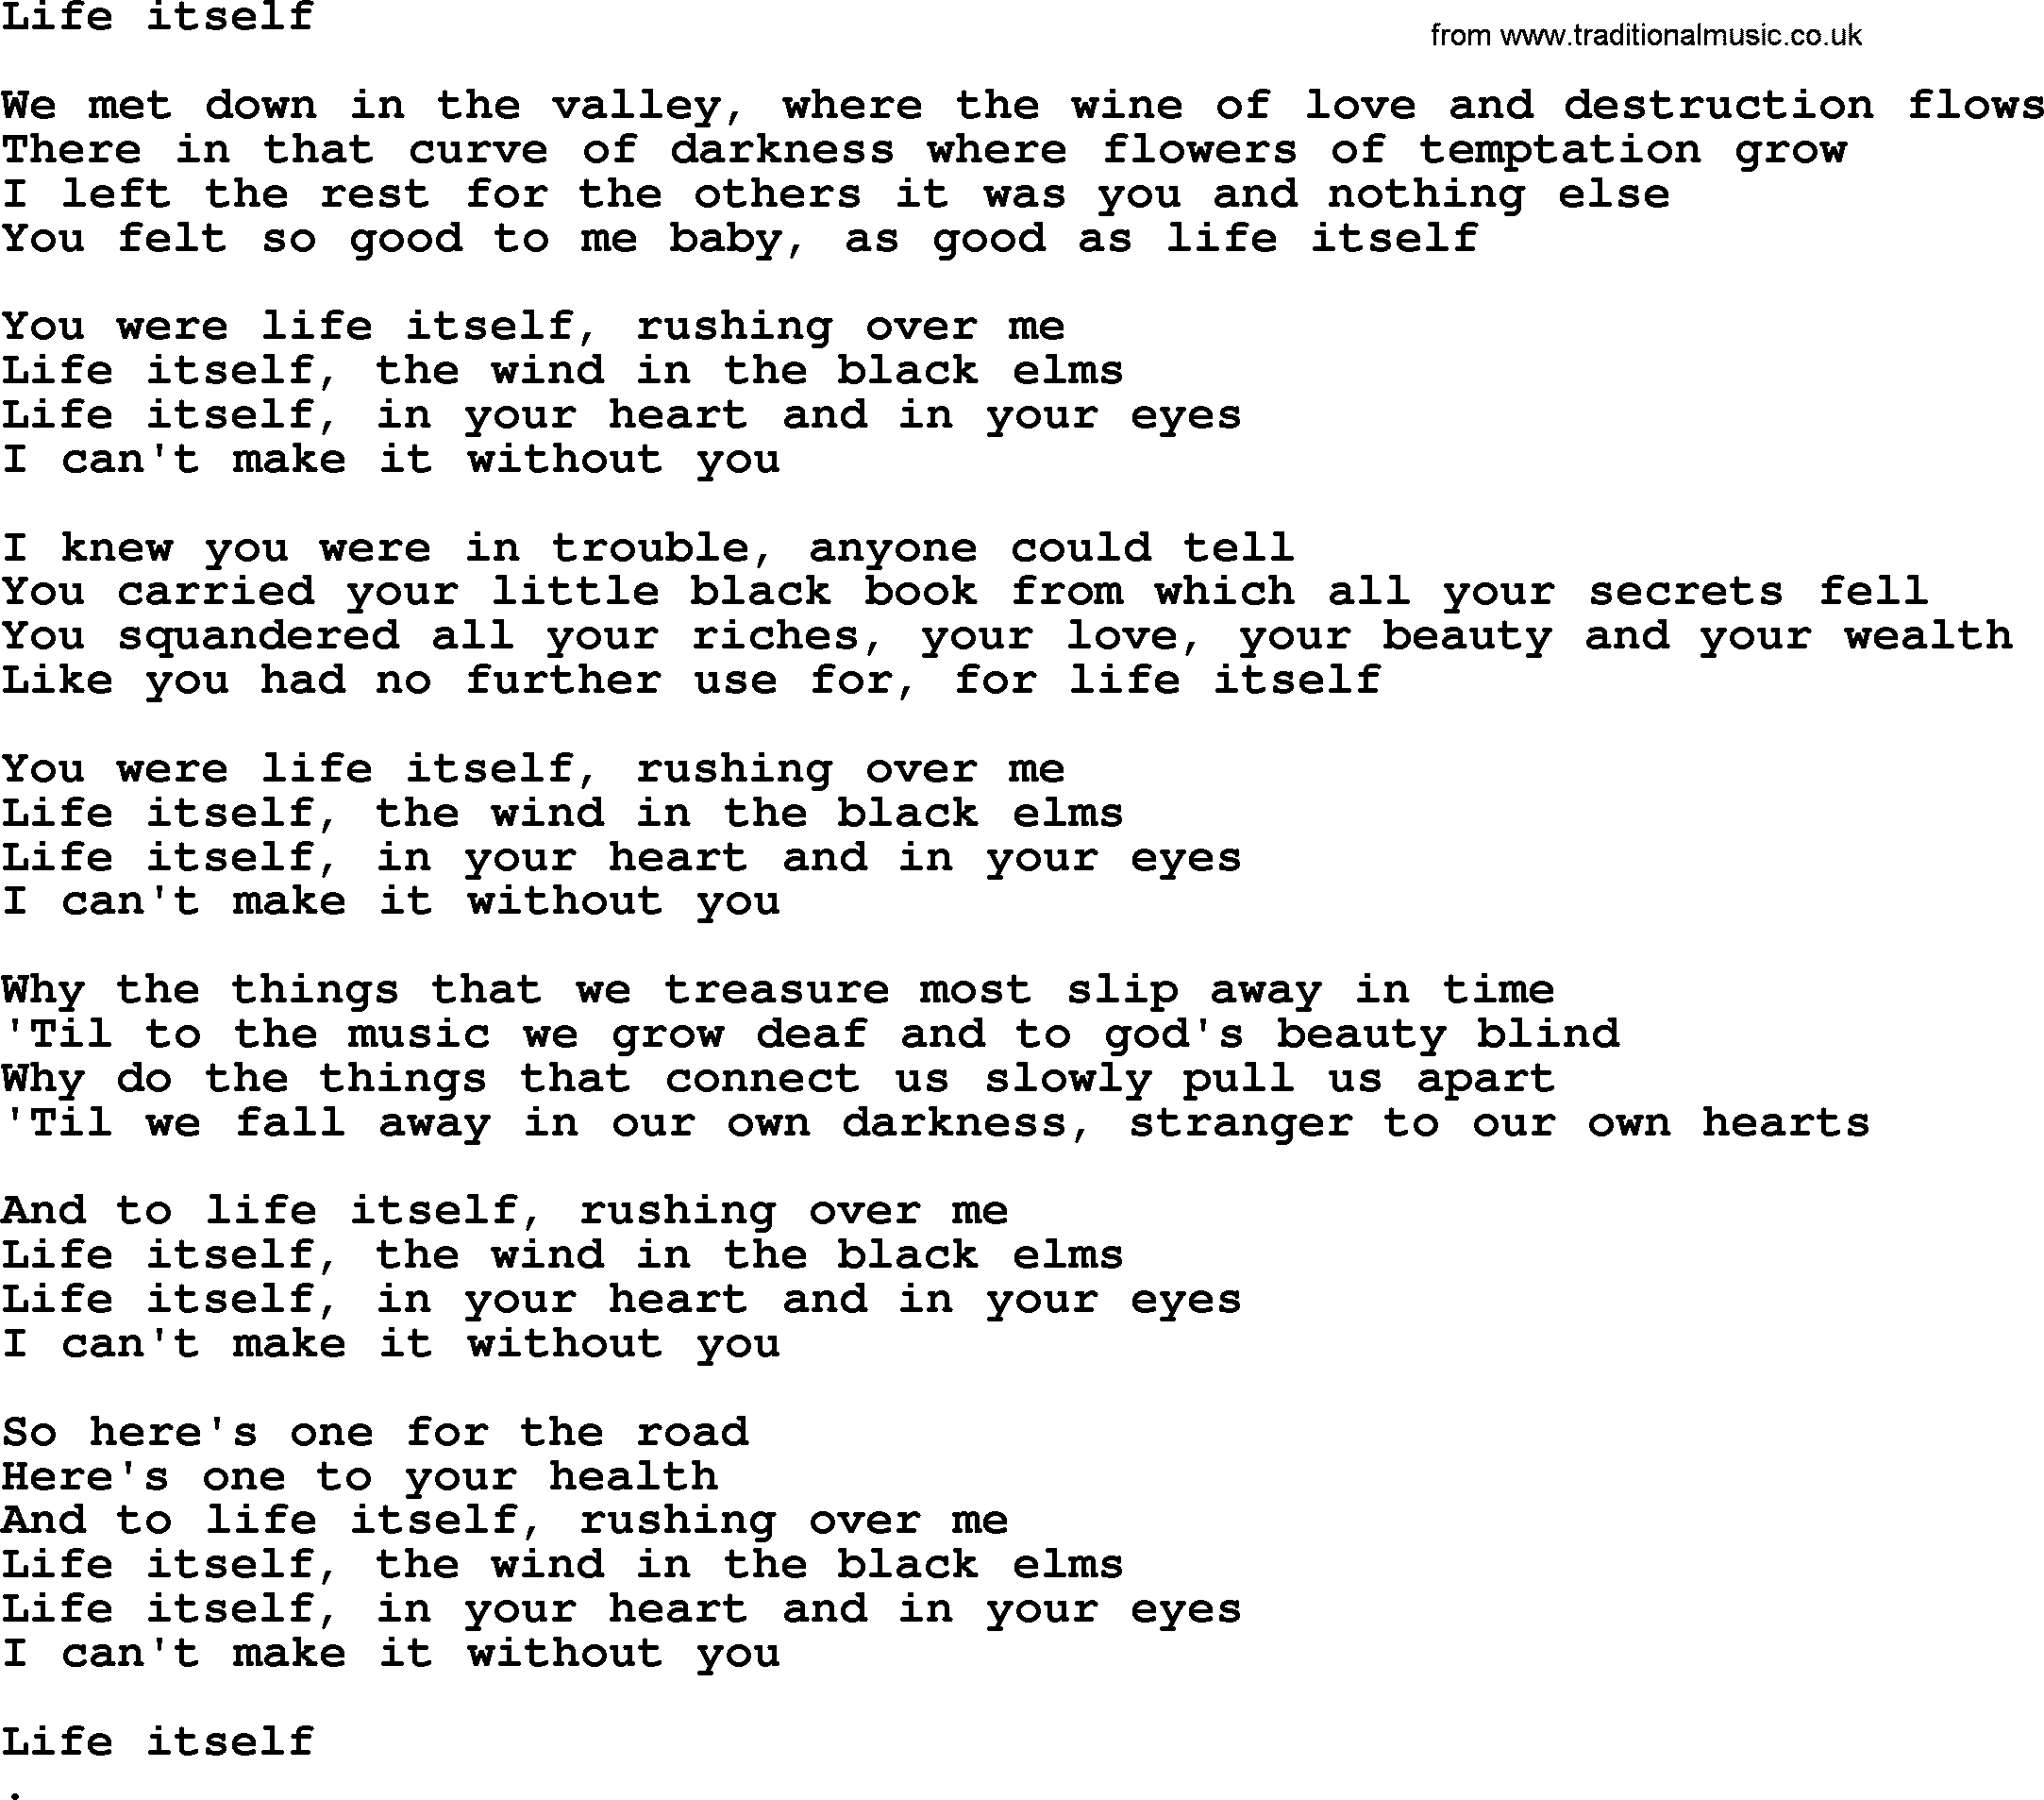 Bruce Springsteen song: Life Itself lyrics